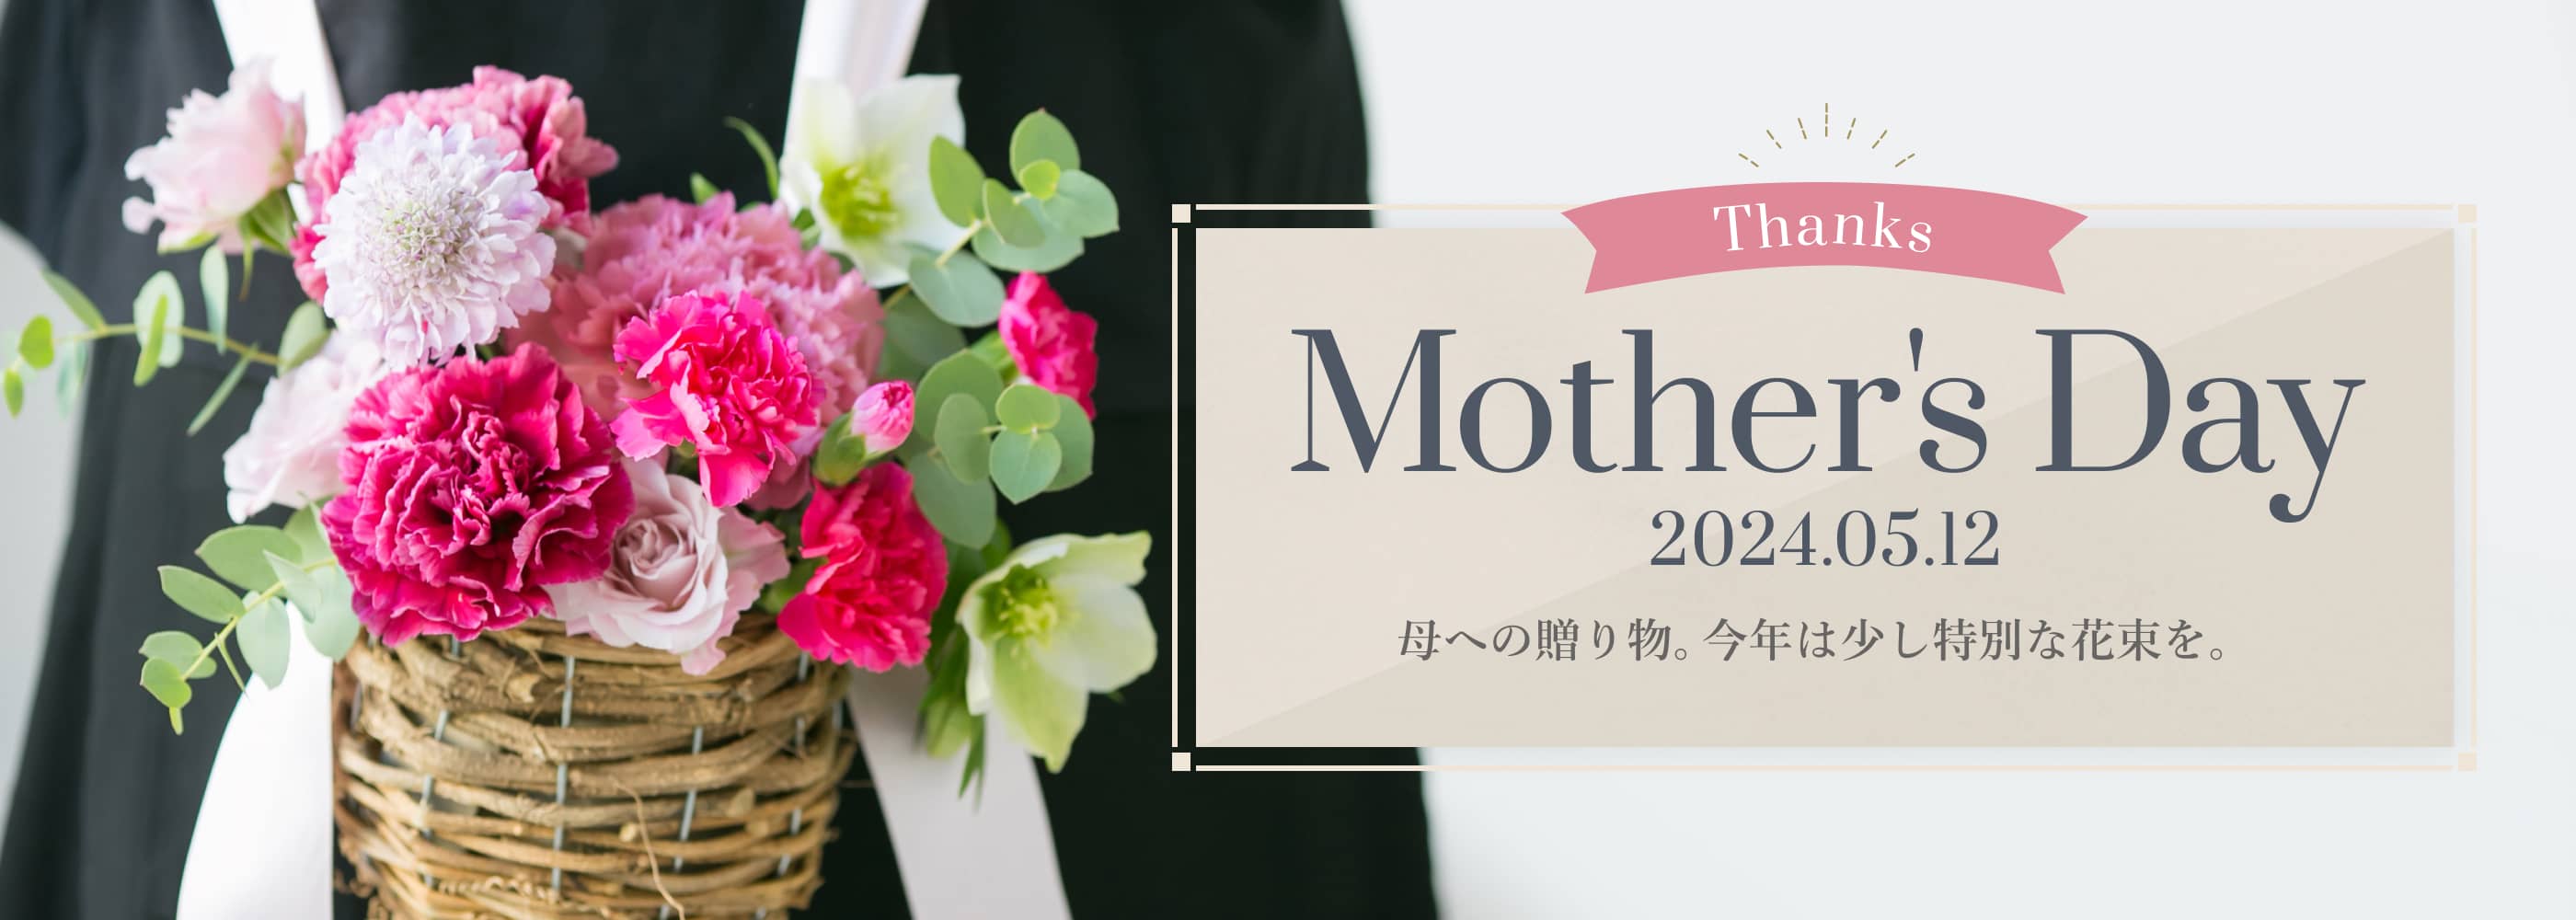 Thanks Mother's Day 2024.05.12 母への贈り物。今年は少し特別な花束を。